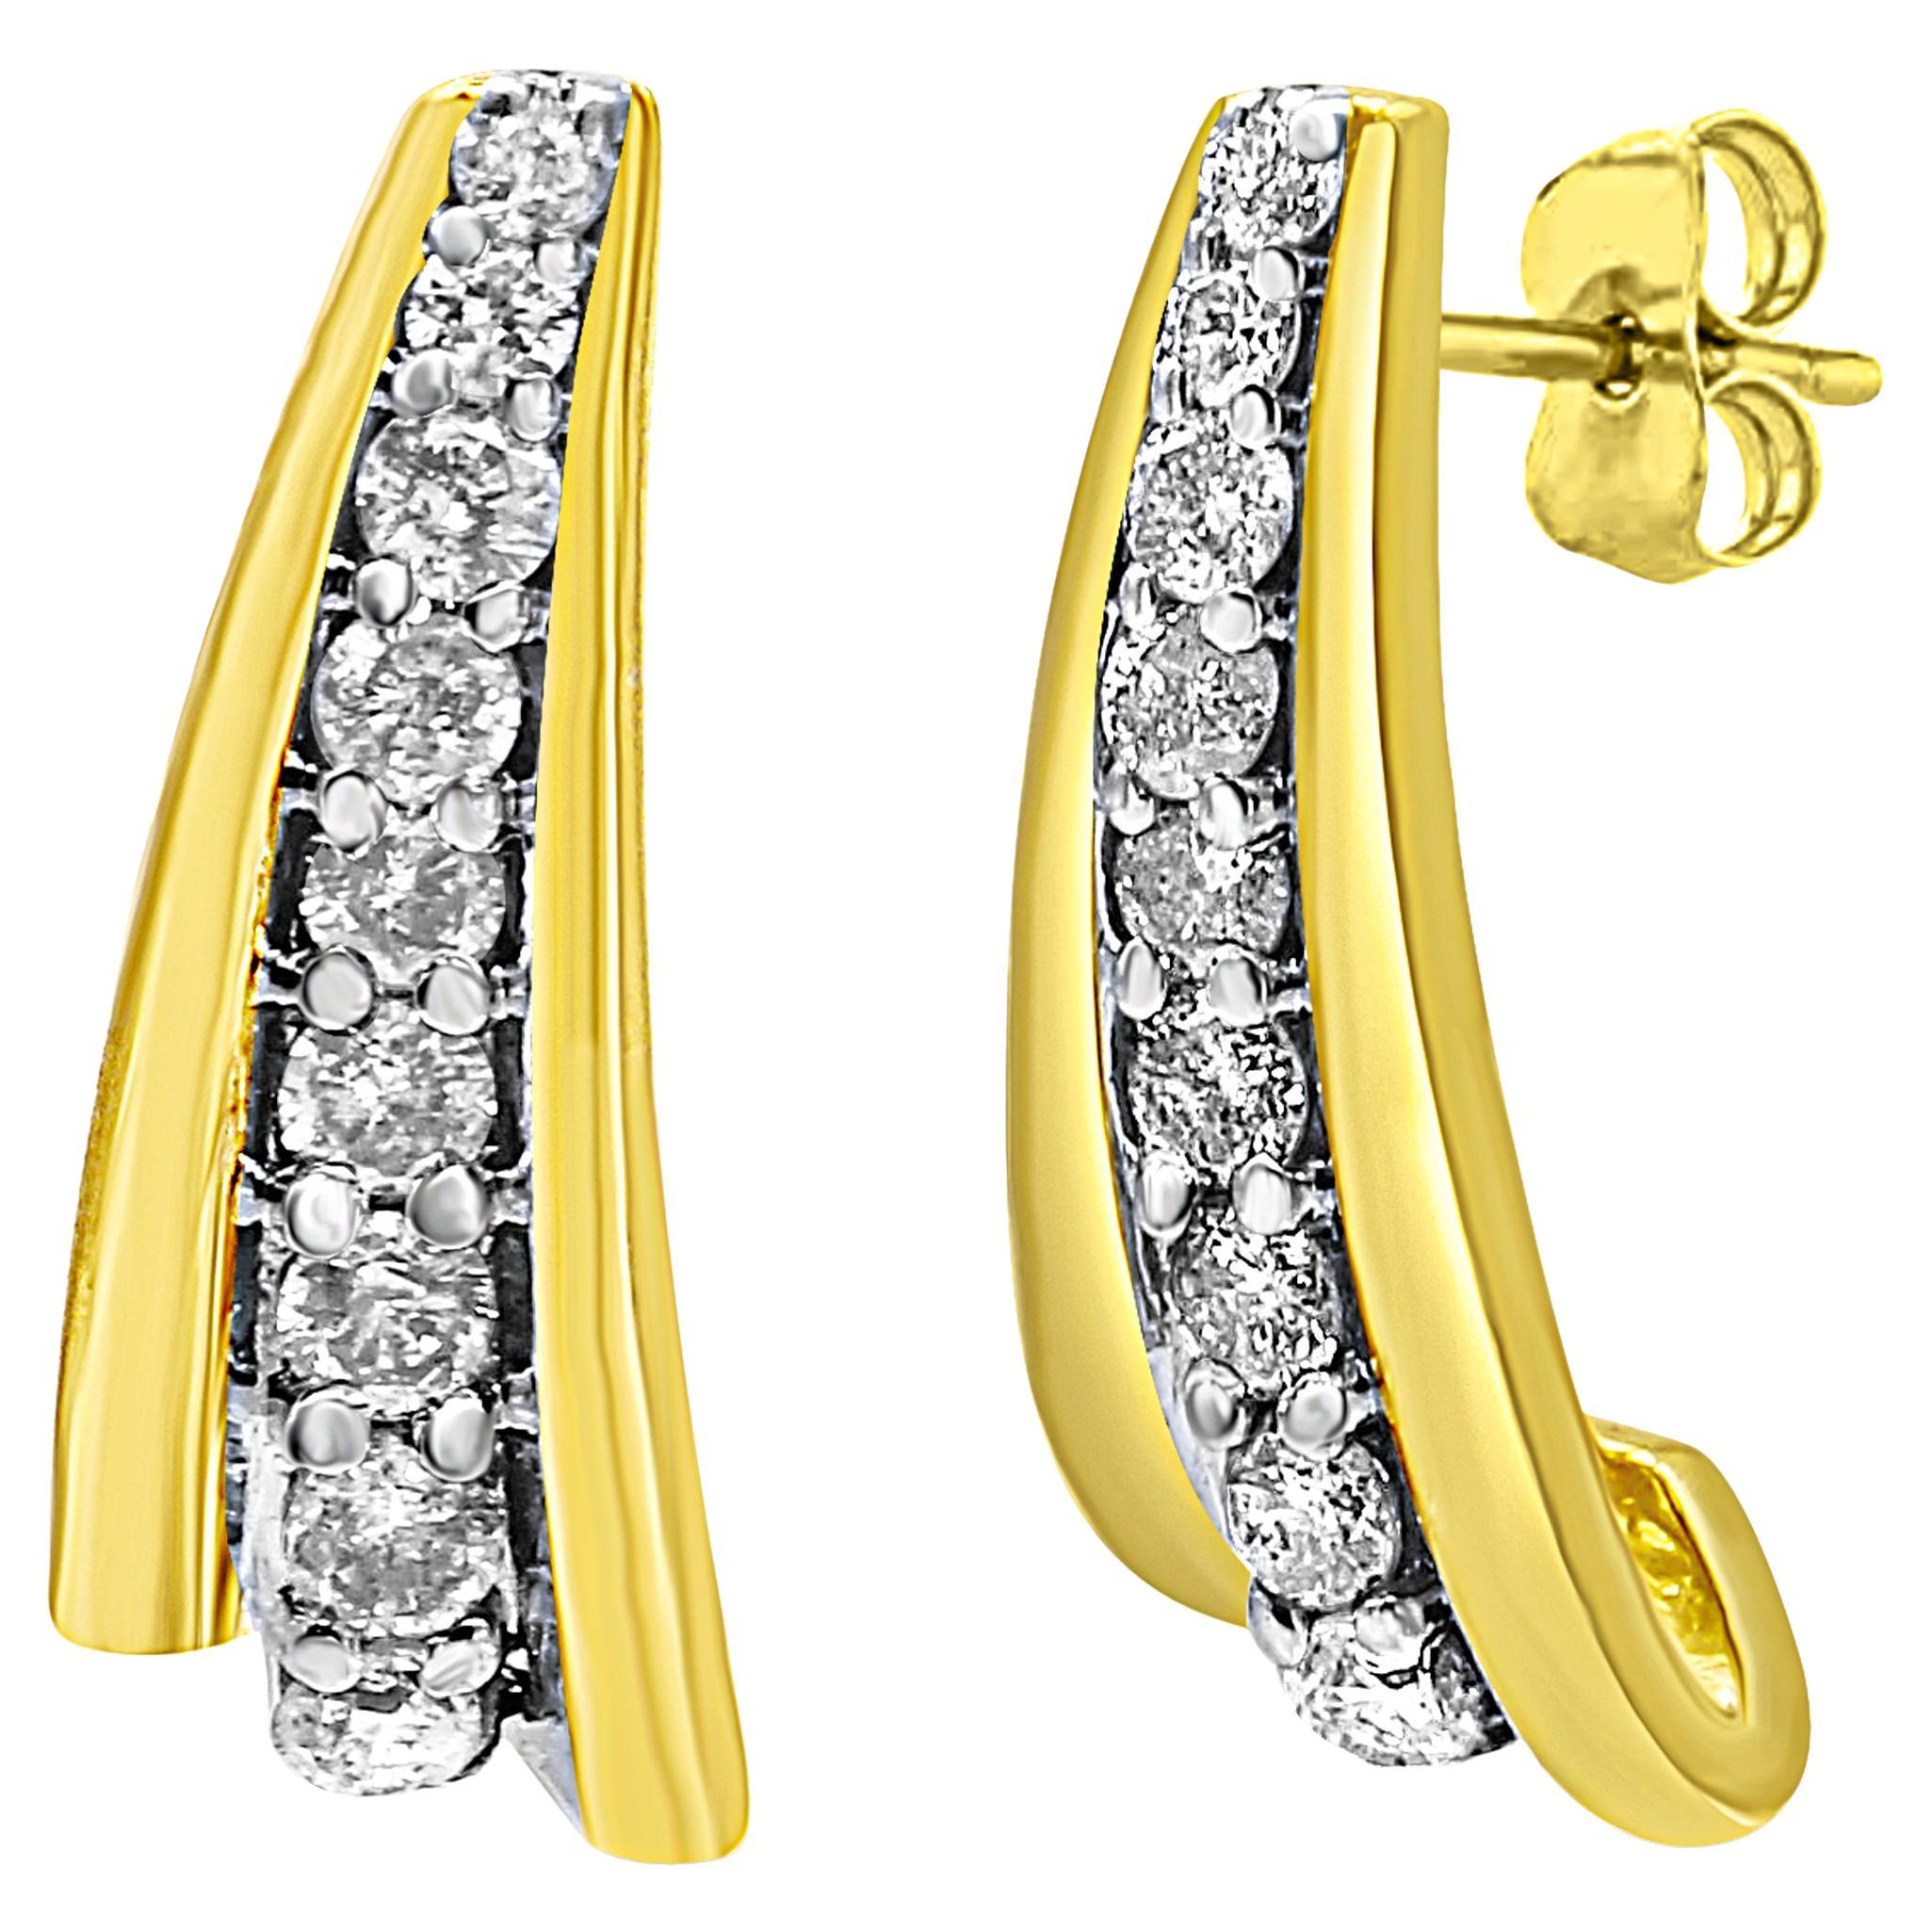 10K Yellow Gold Plated Sterling Silver 1.0 Carat Diamond Huggie Earrings